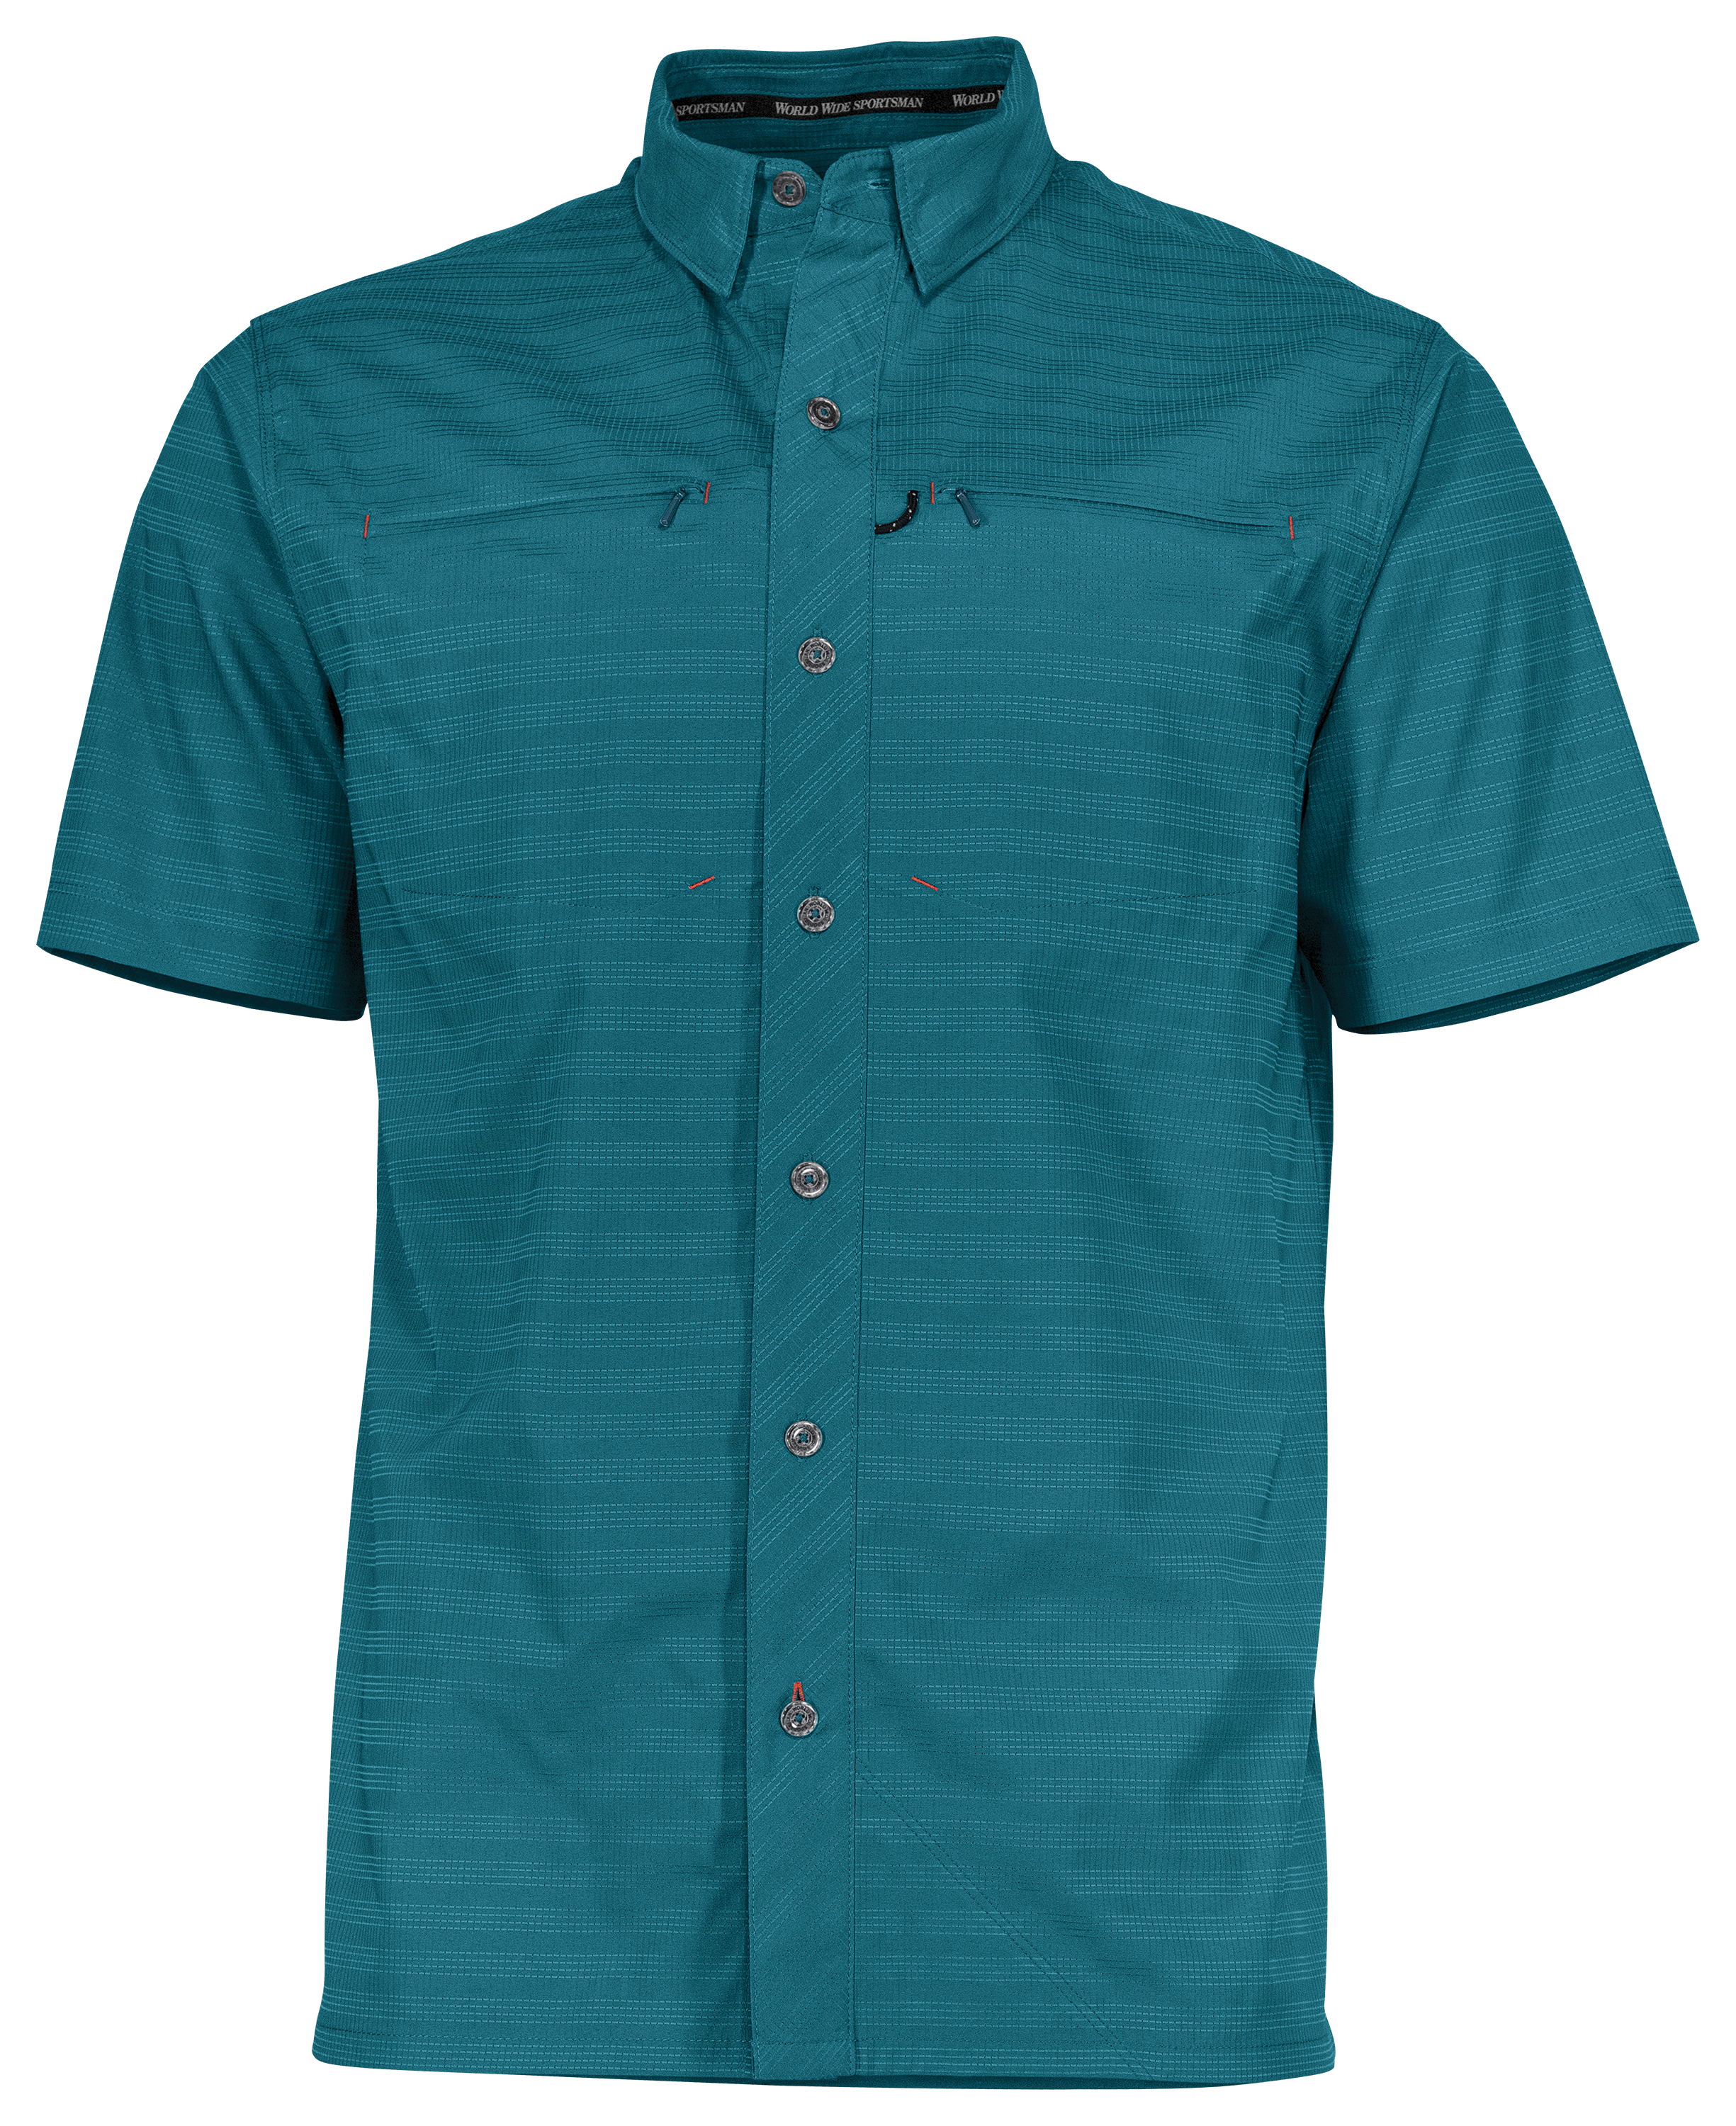 World Wide Sportsman Seacrest 2-Pocket Short-Sleeve Button-Down Shirt for Men - Tapestry - L